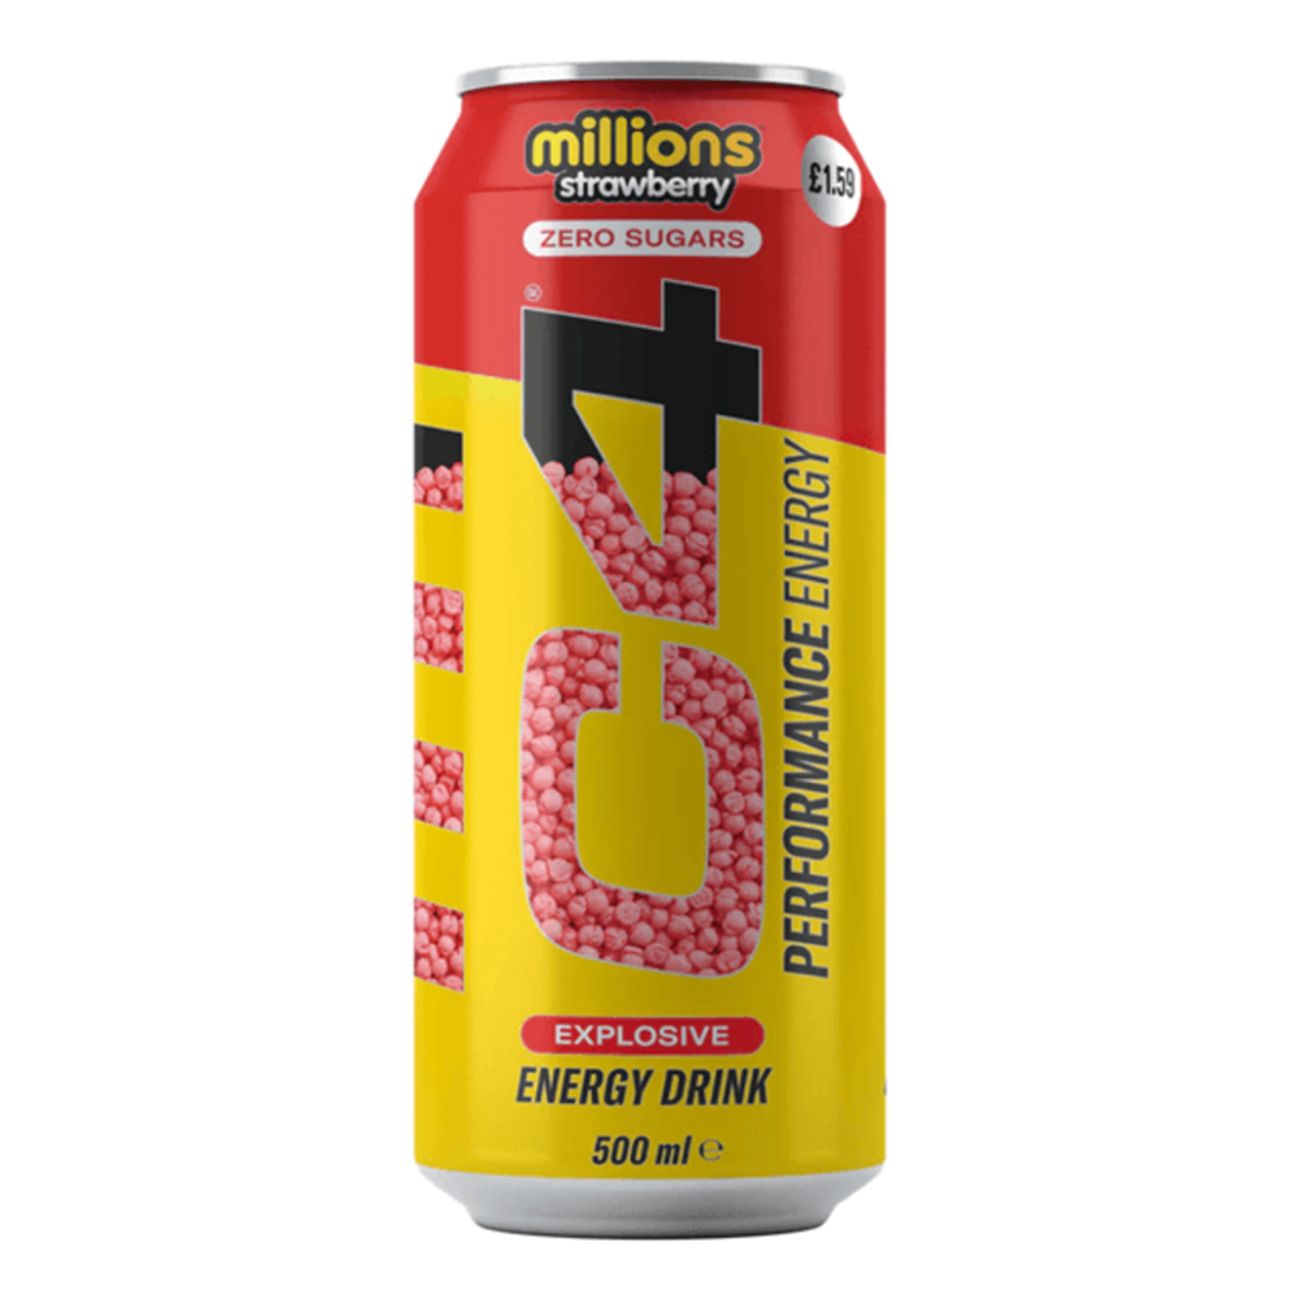 c4-energy-drink-millions-strawberry-102560-1